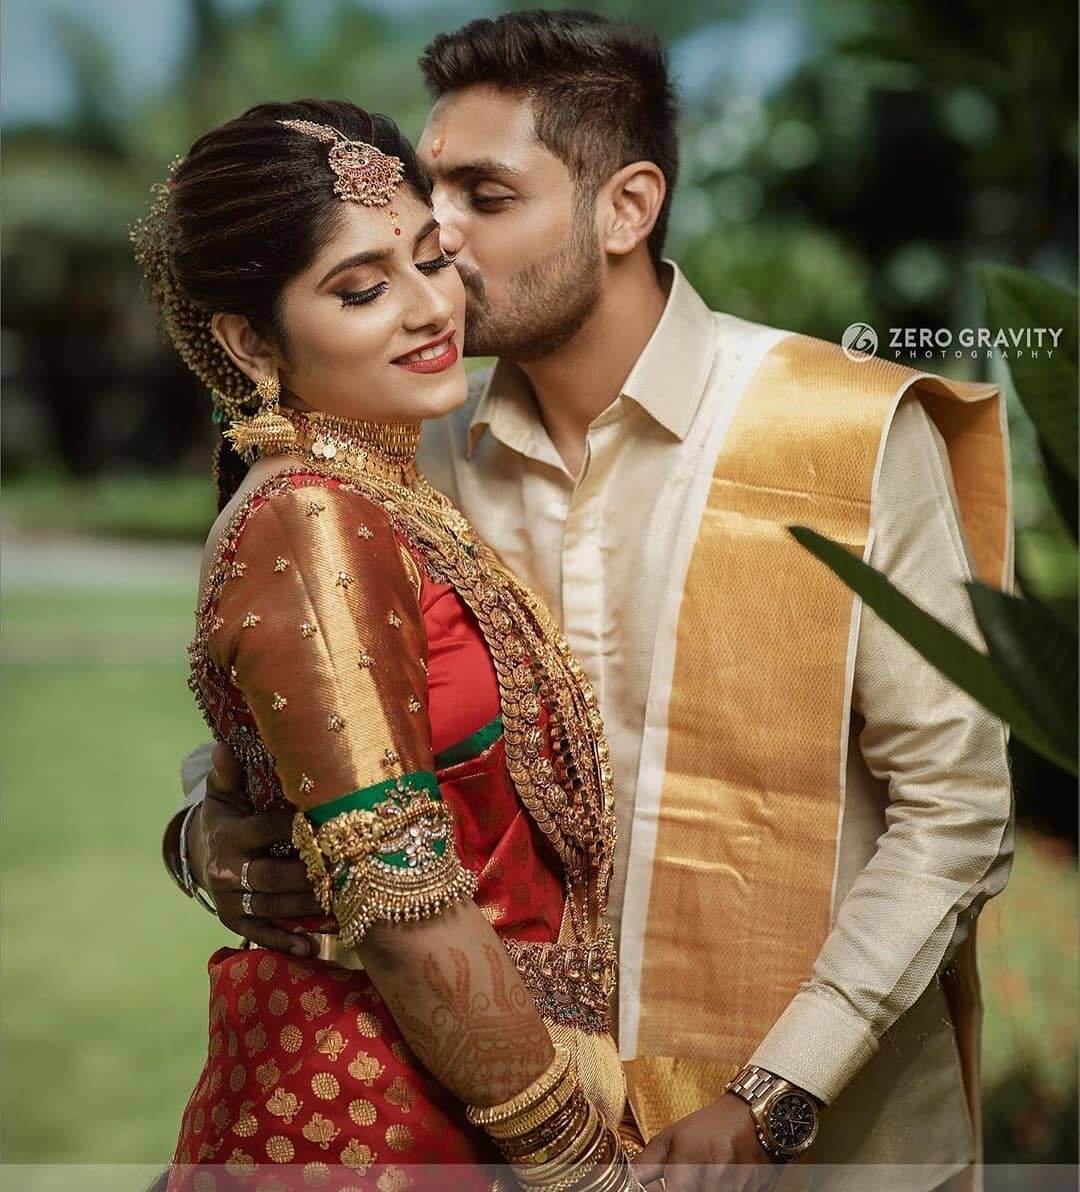 9 Top Mehndi Songs for Your Indian Wedding - My Wedding Songs